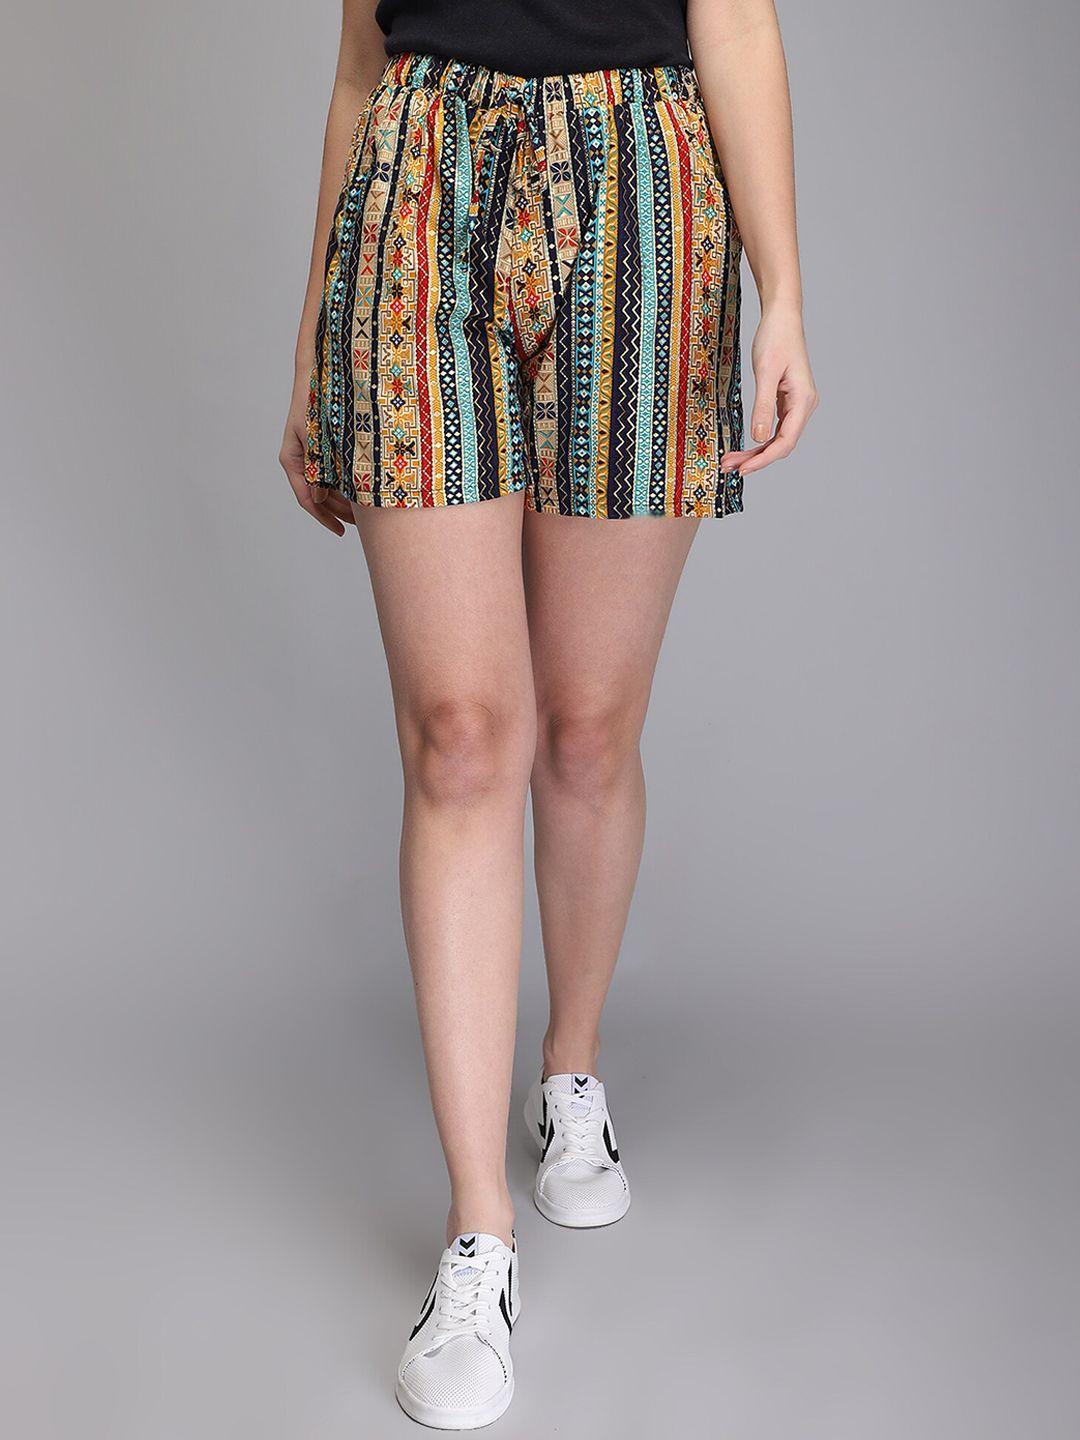 aditi-wasan-women-geometric-printed-shorts